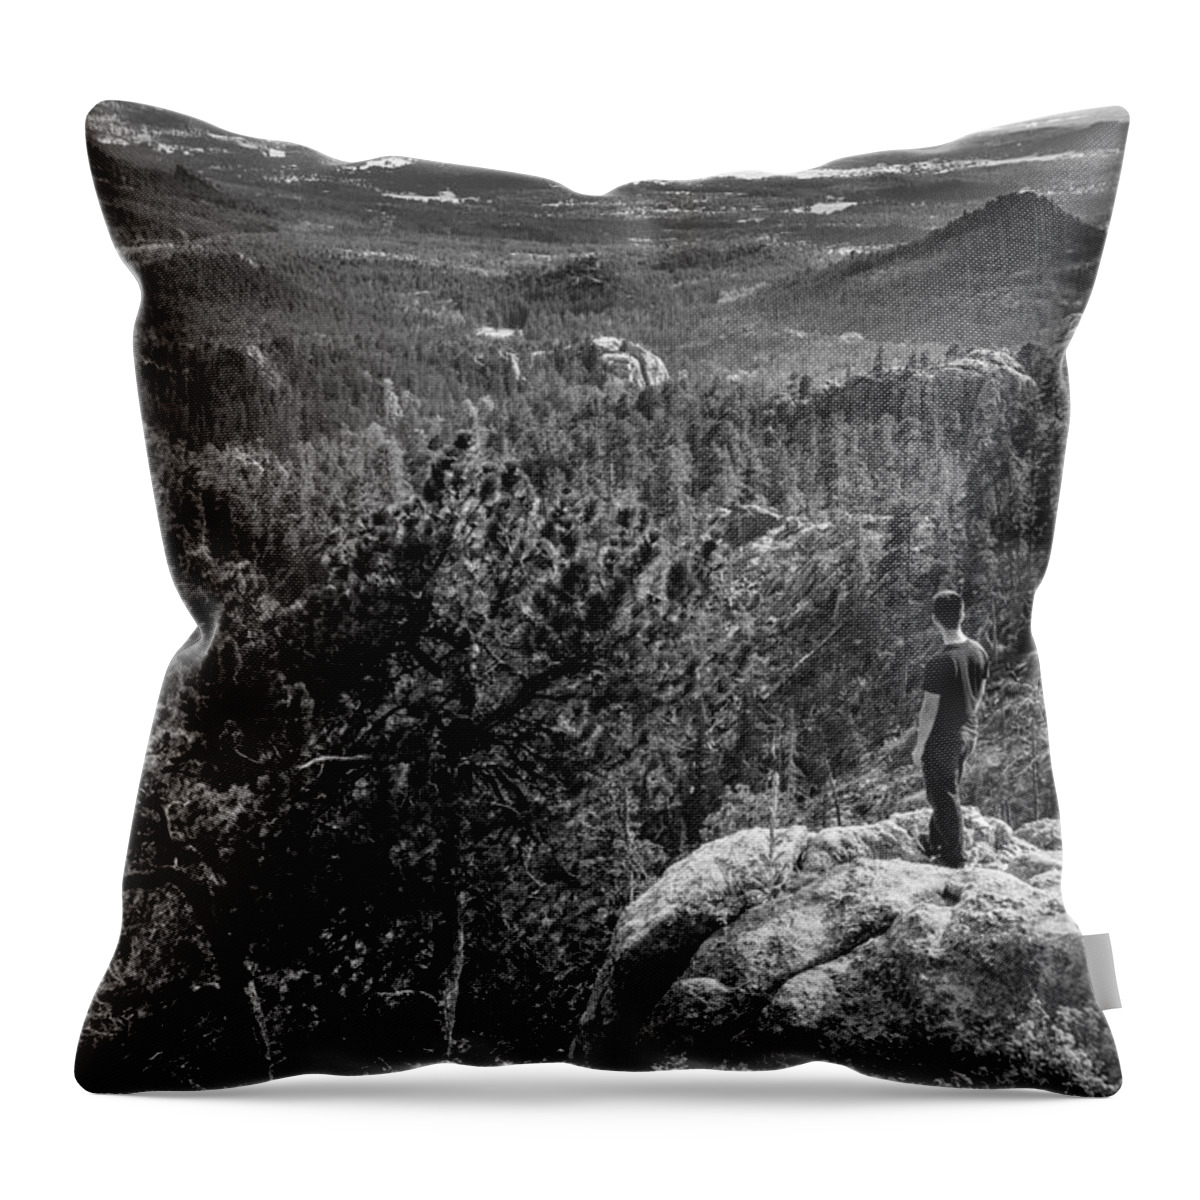 South Dakota Throw Pillow featuring the photograph Needles Point South Dakota by Jason Moynihan